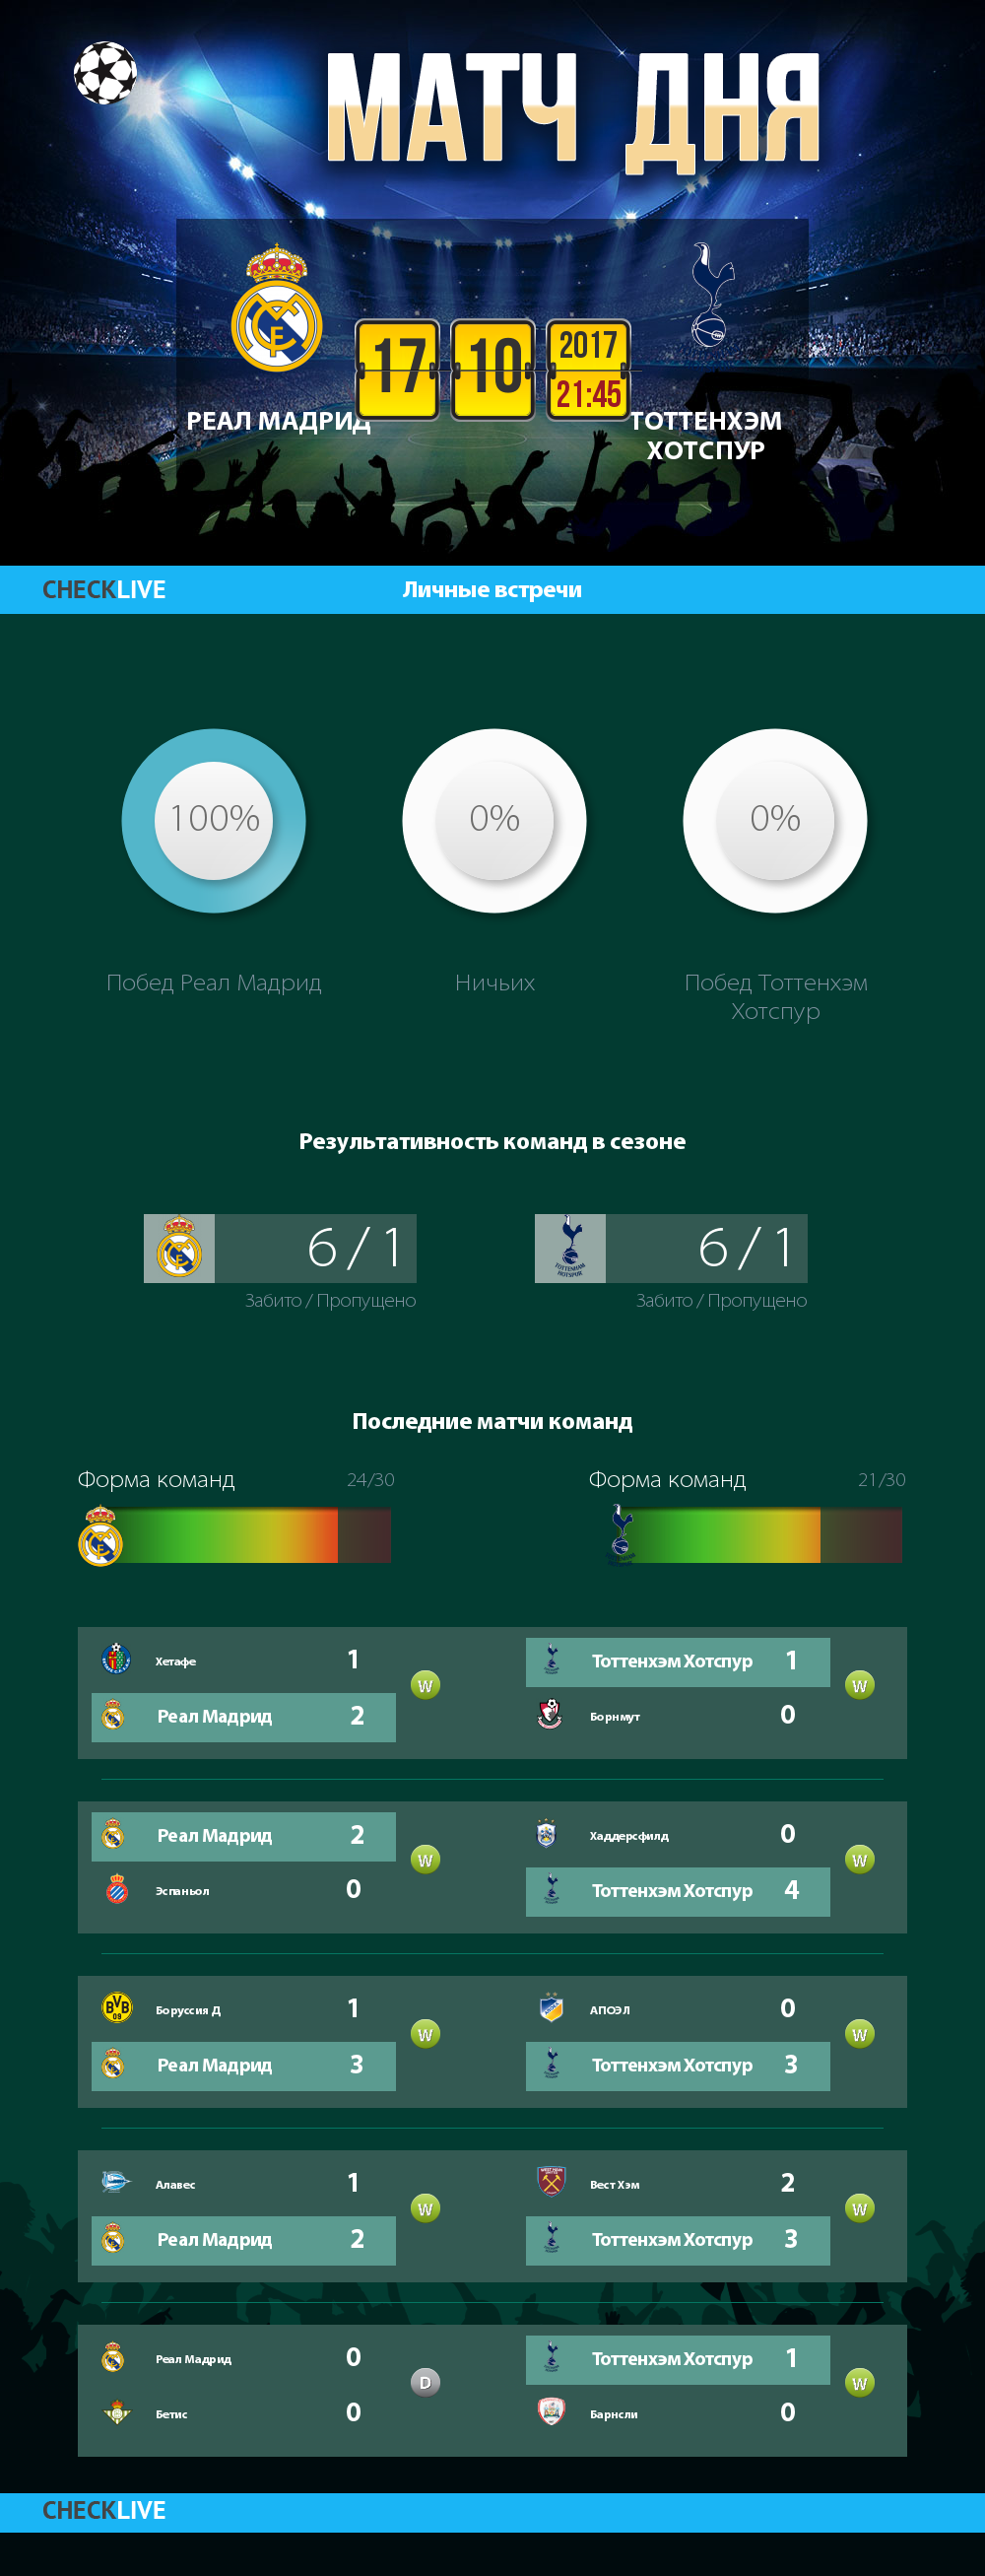 Инфографика Реал Мадрид и Тоттенхэм Хотспур матч дня 17.10.2017